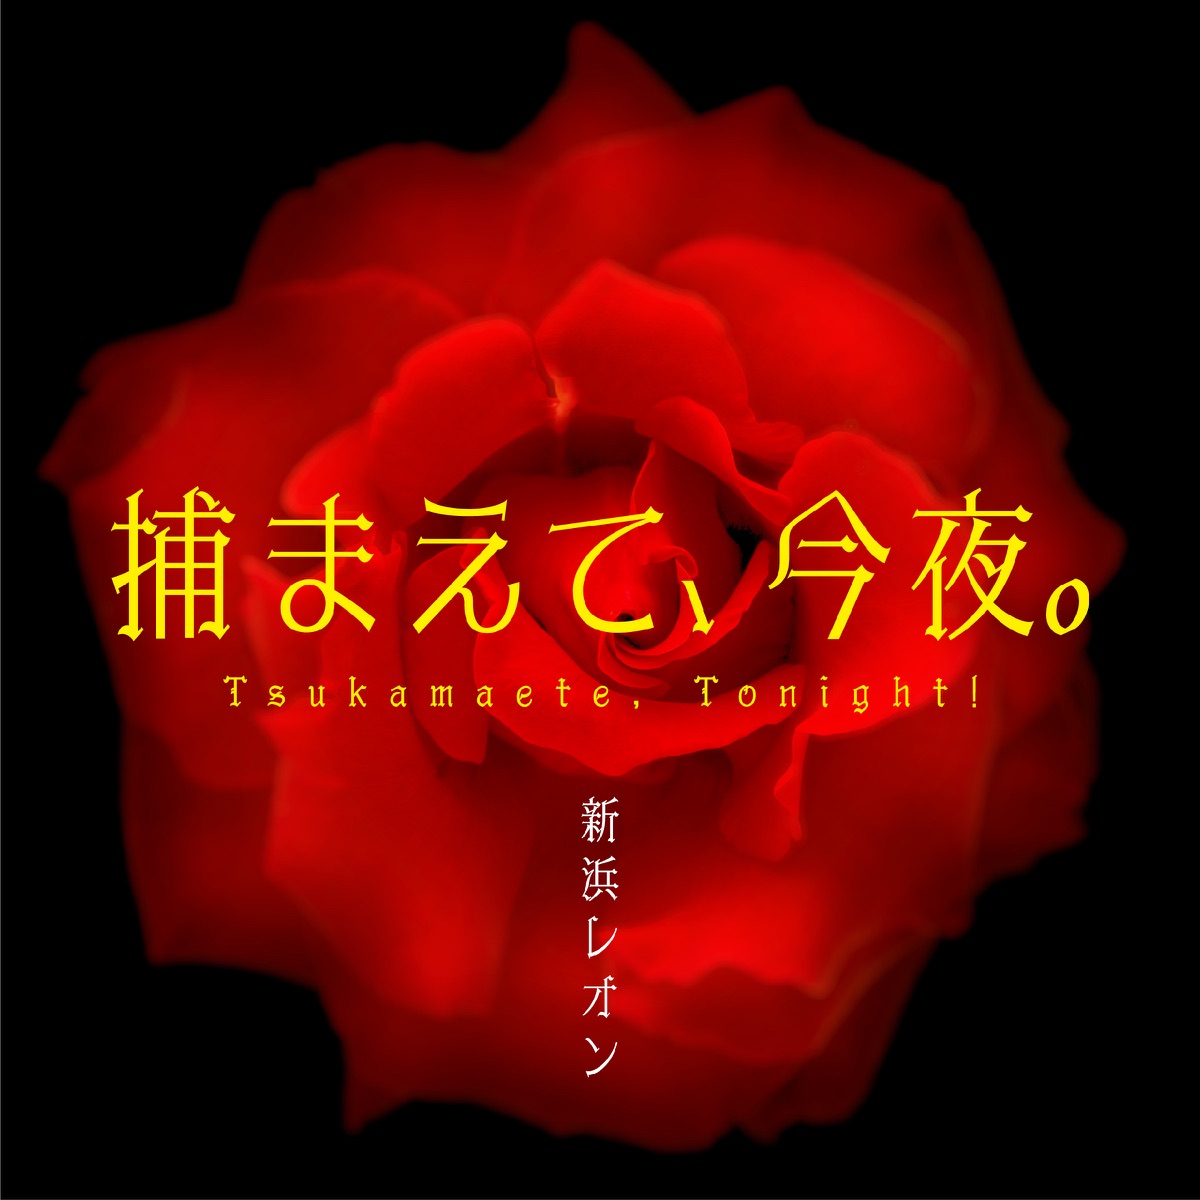 Cover art for『Leon Niihama - Tsukamaete, Tonight!』from the release『Tsukamaete, Tonight!』